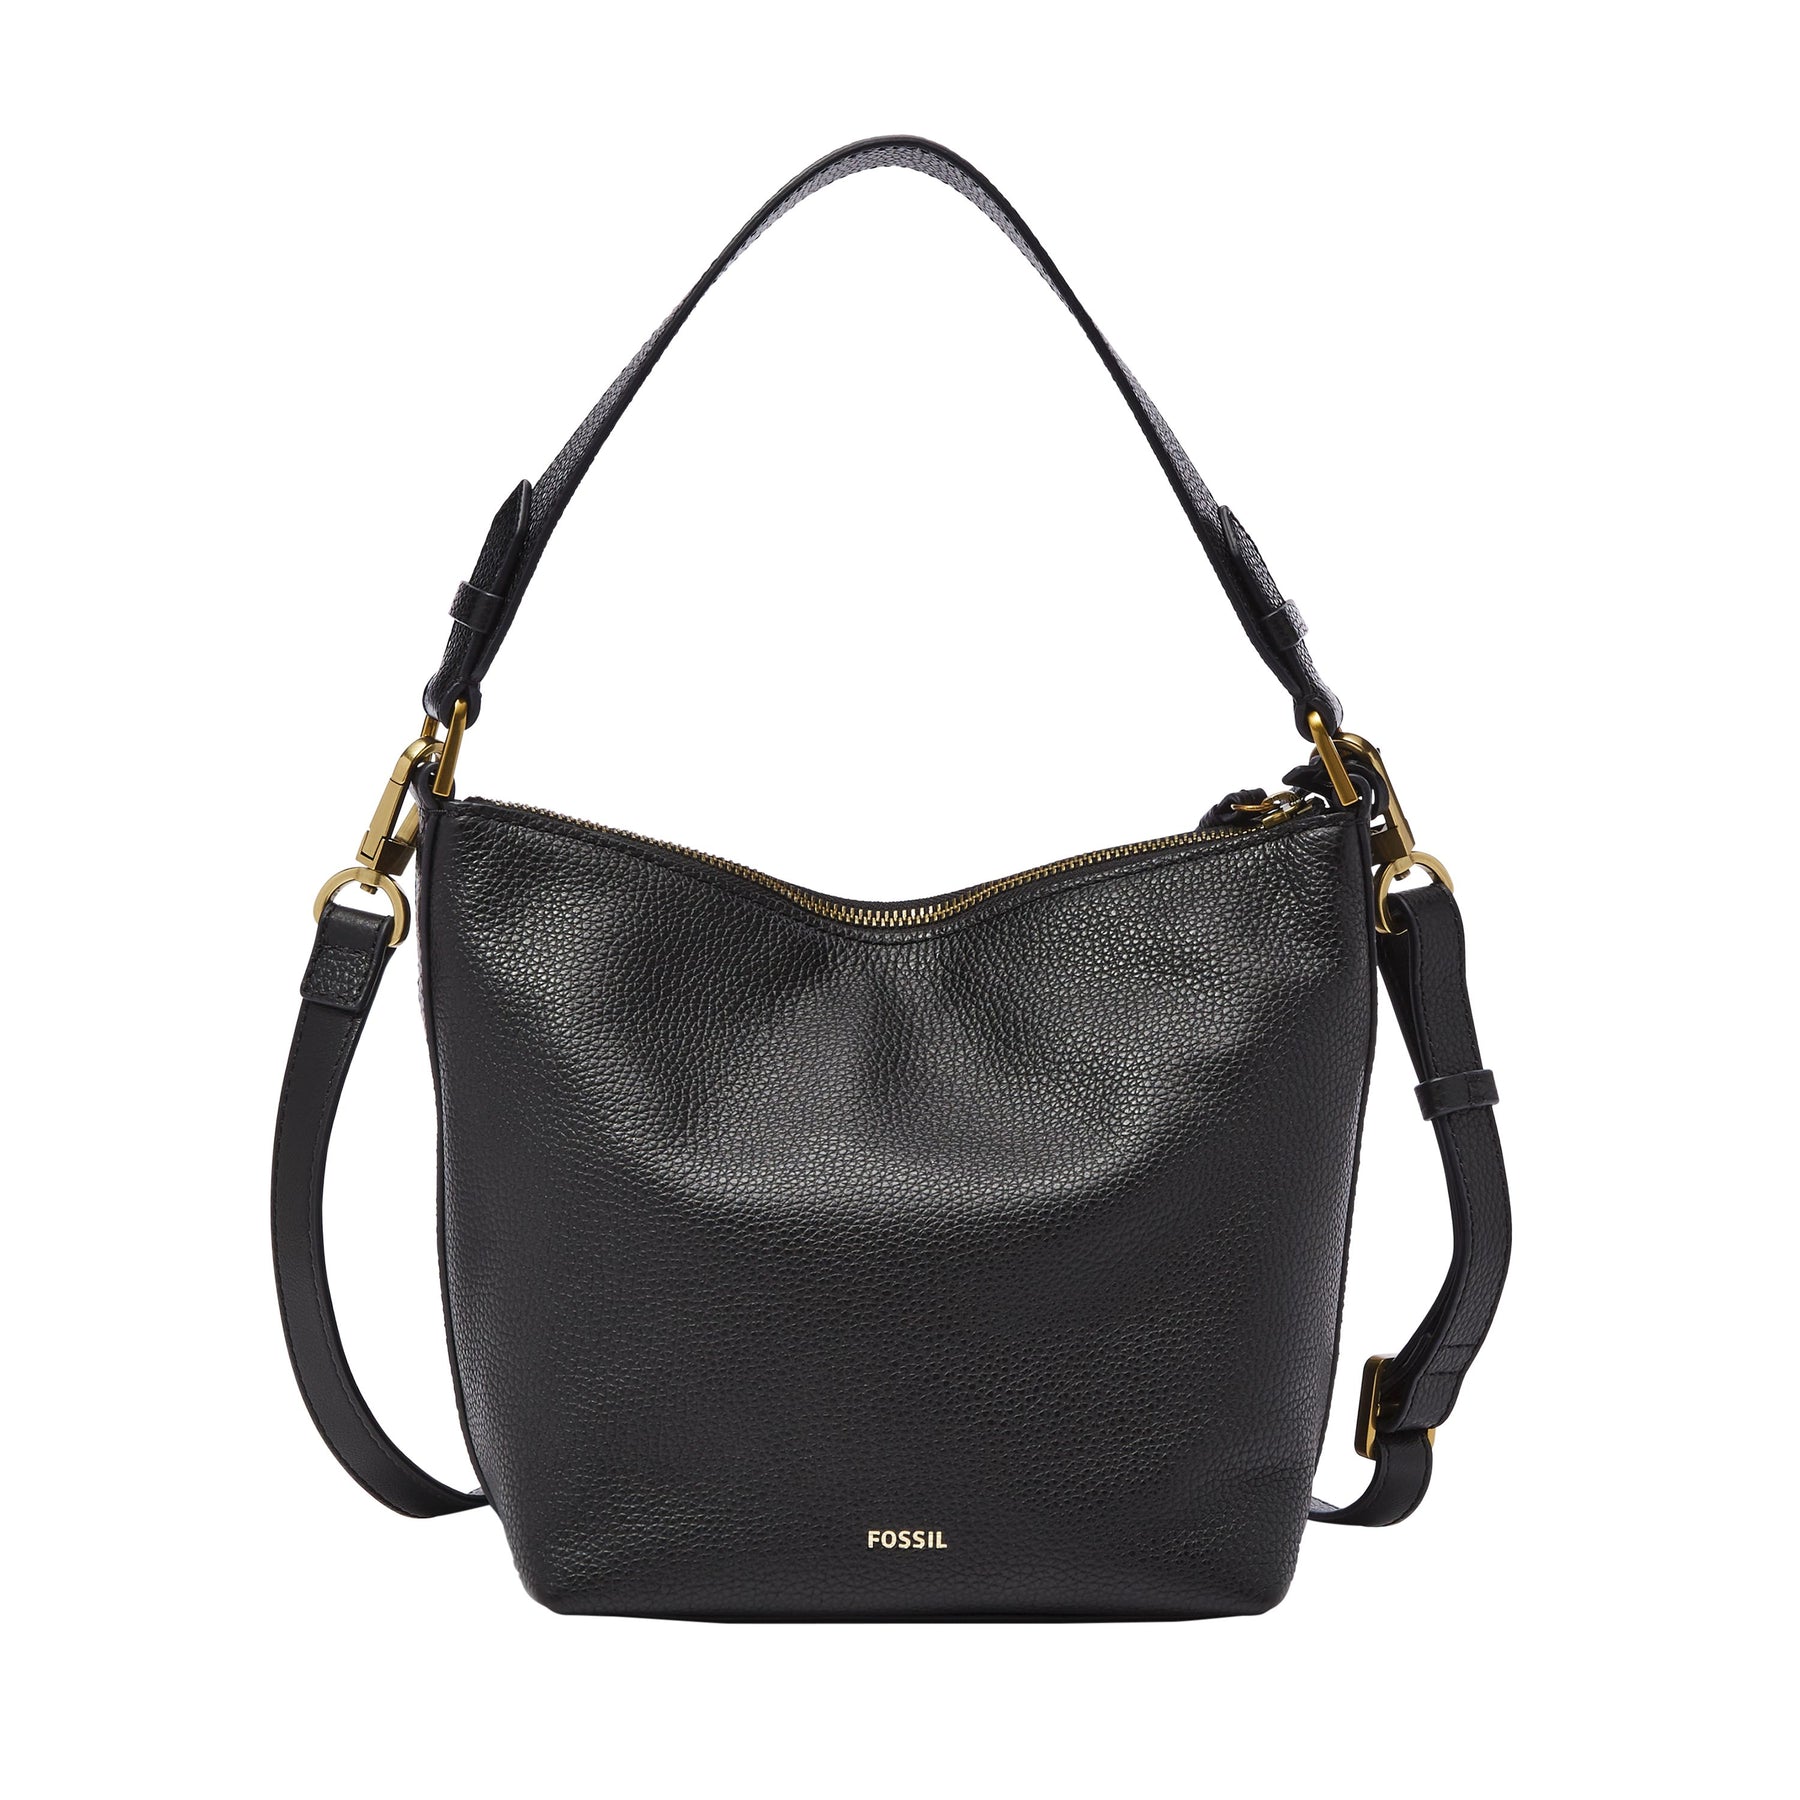 chelsea wears: Clare Vivier Messenger Bag